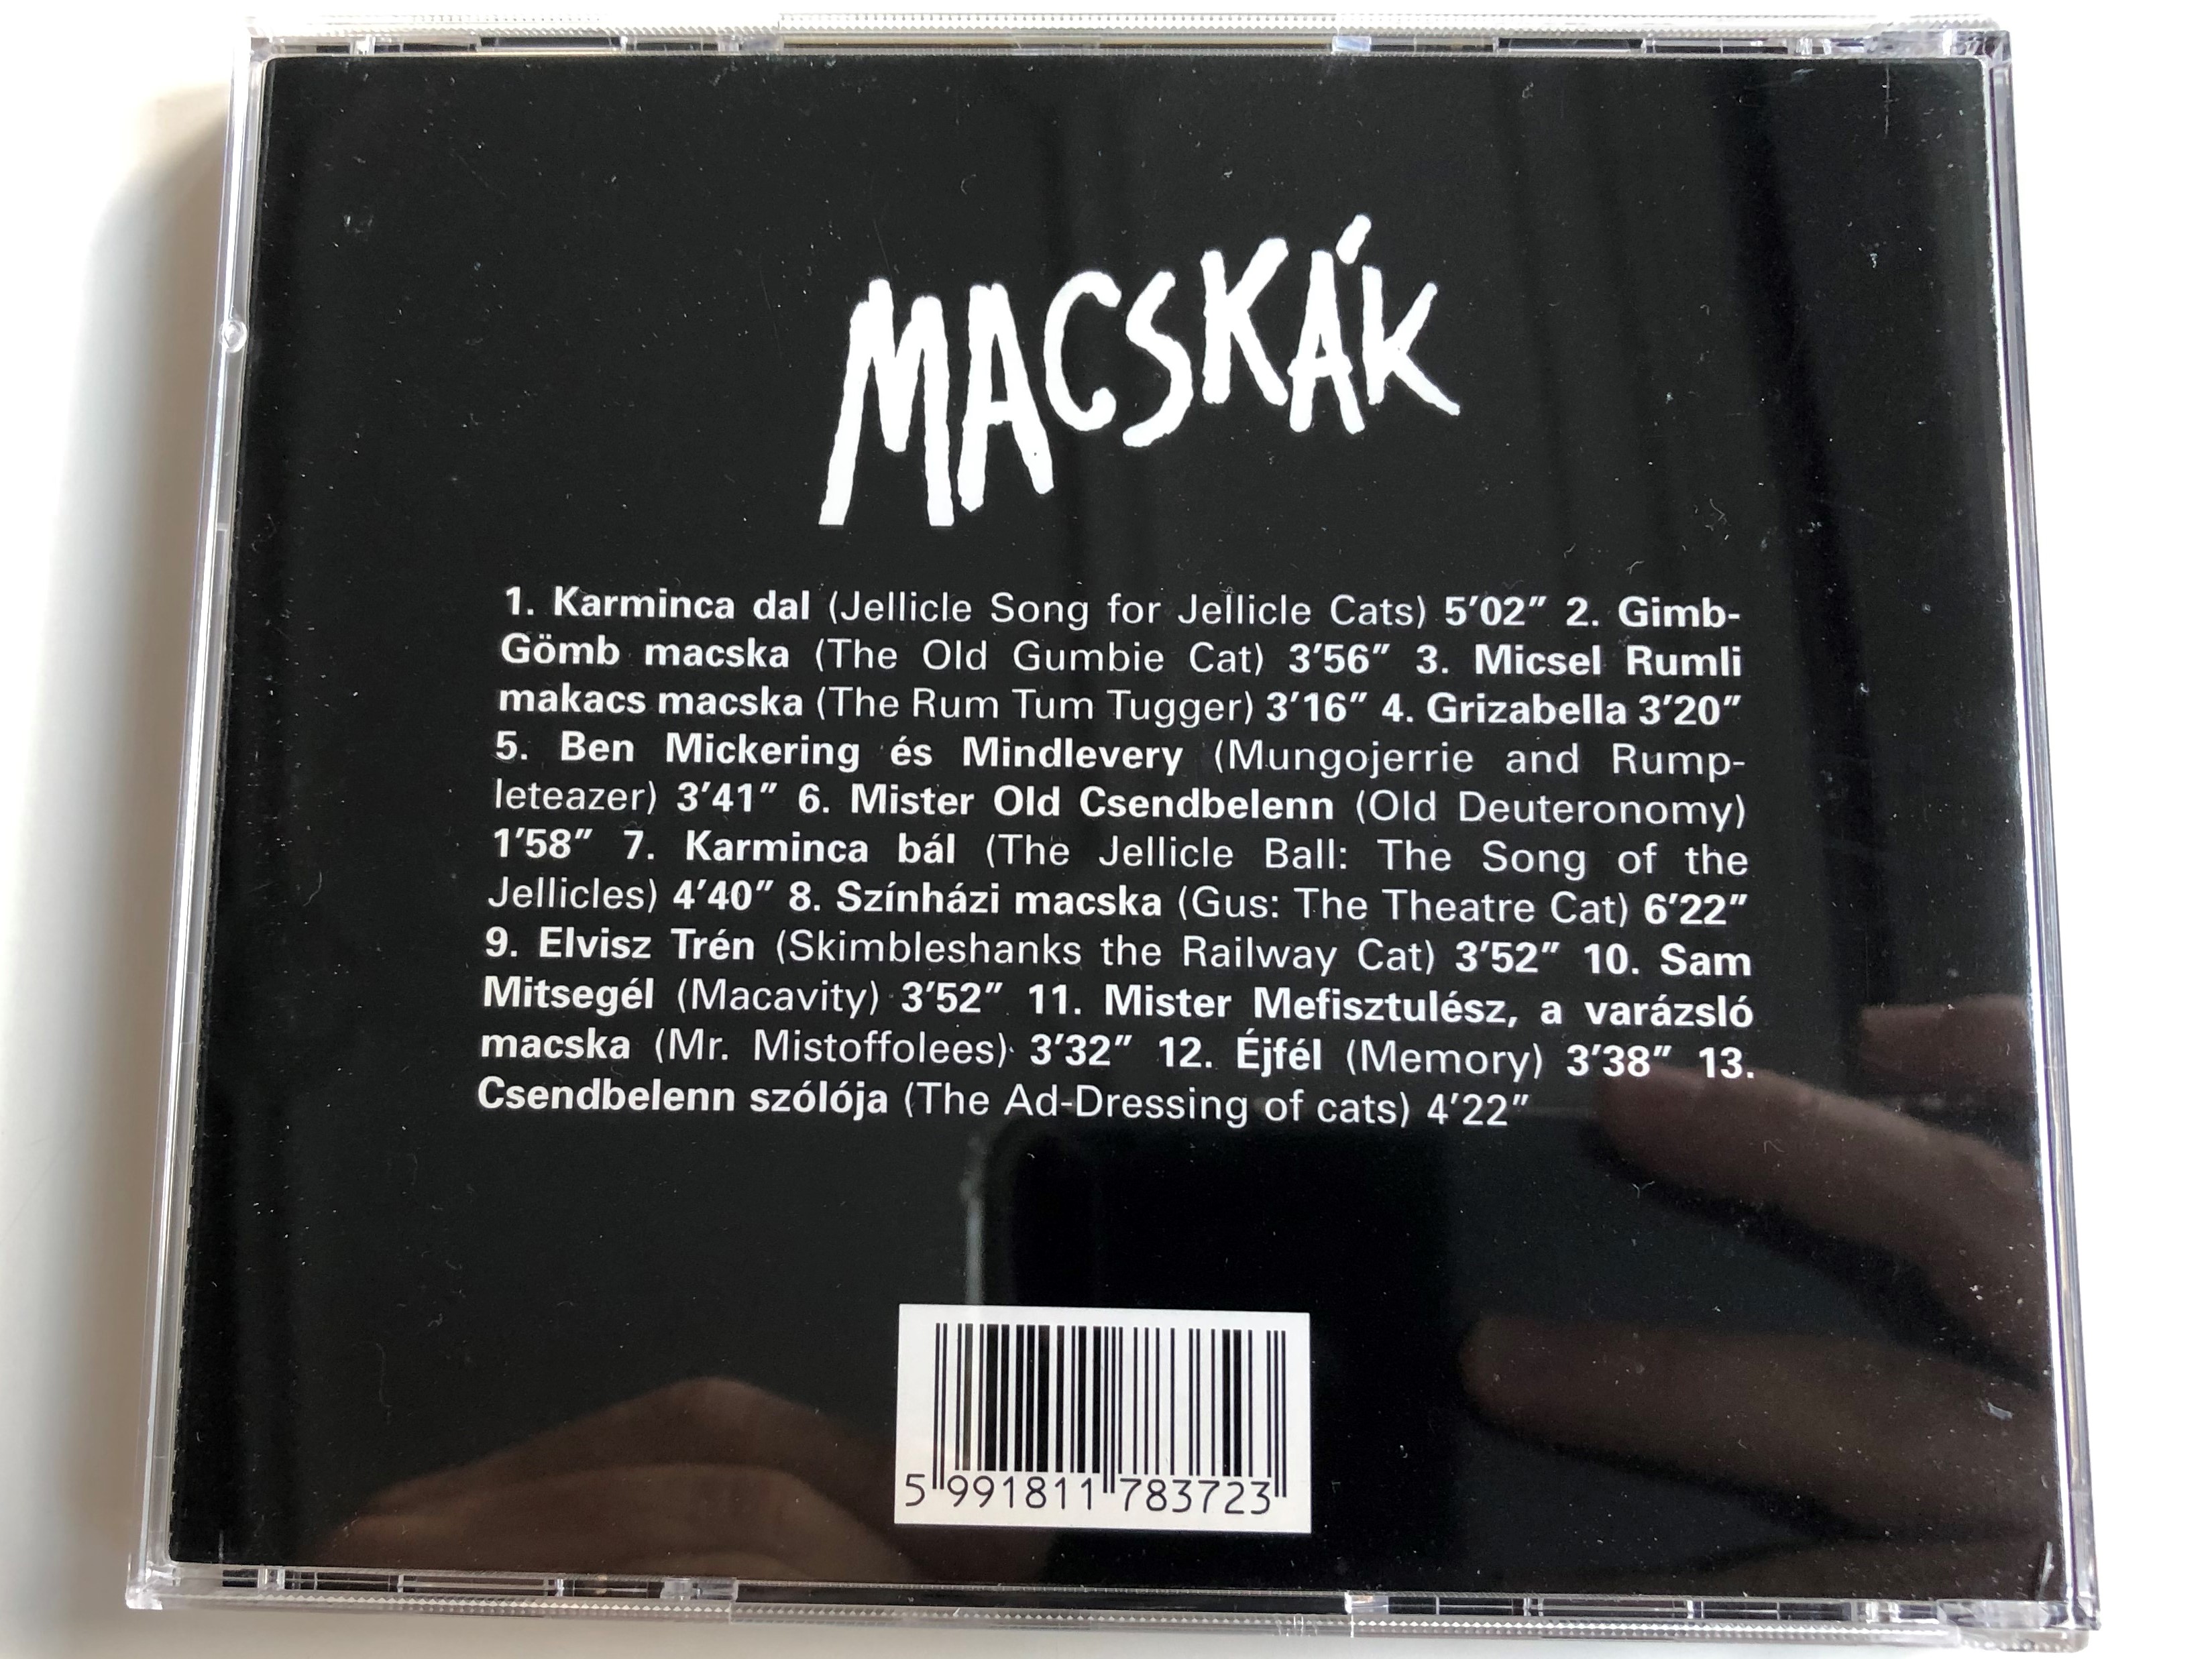 cats-zenes-reszletek-a-madach-szinhaz-macskak-eloadasabol-gong-audio-cd-1996-hcd-17837-5-.jpg